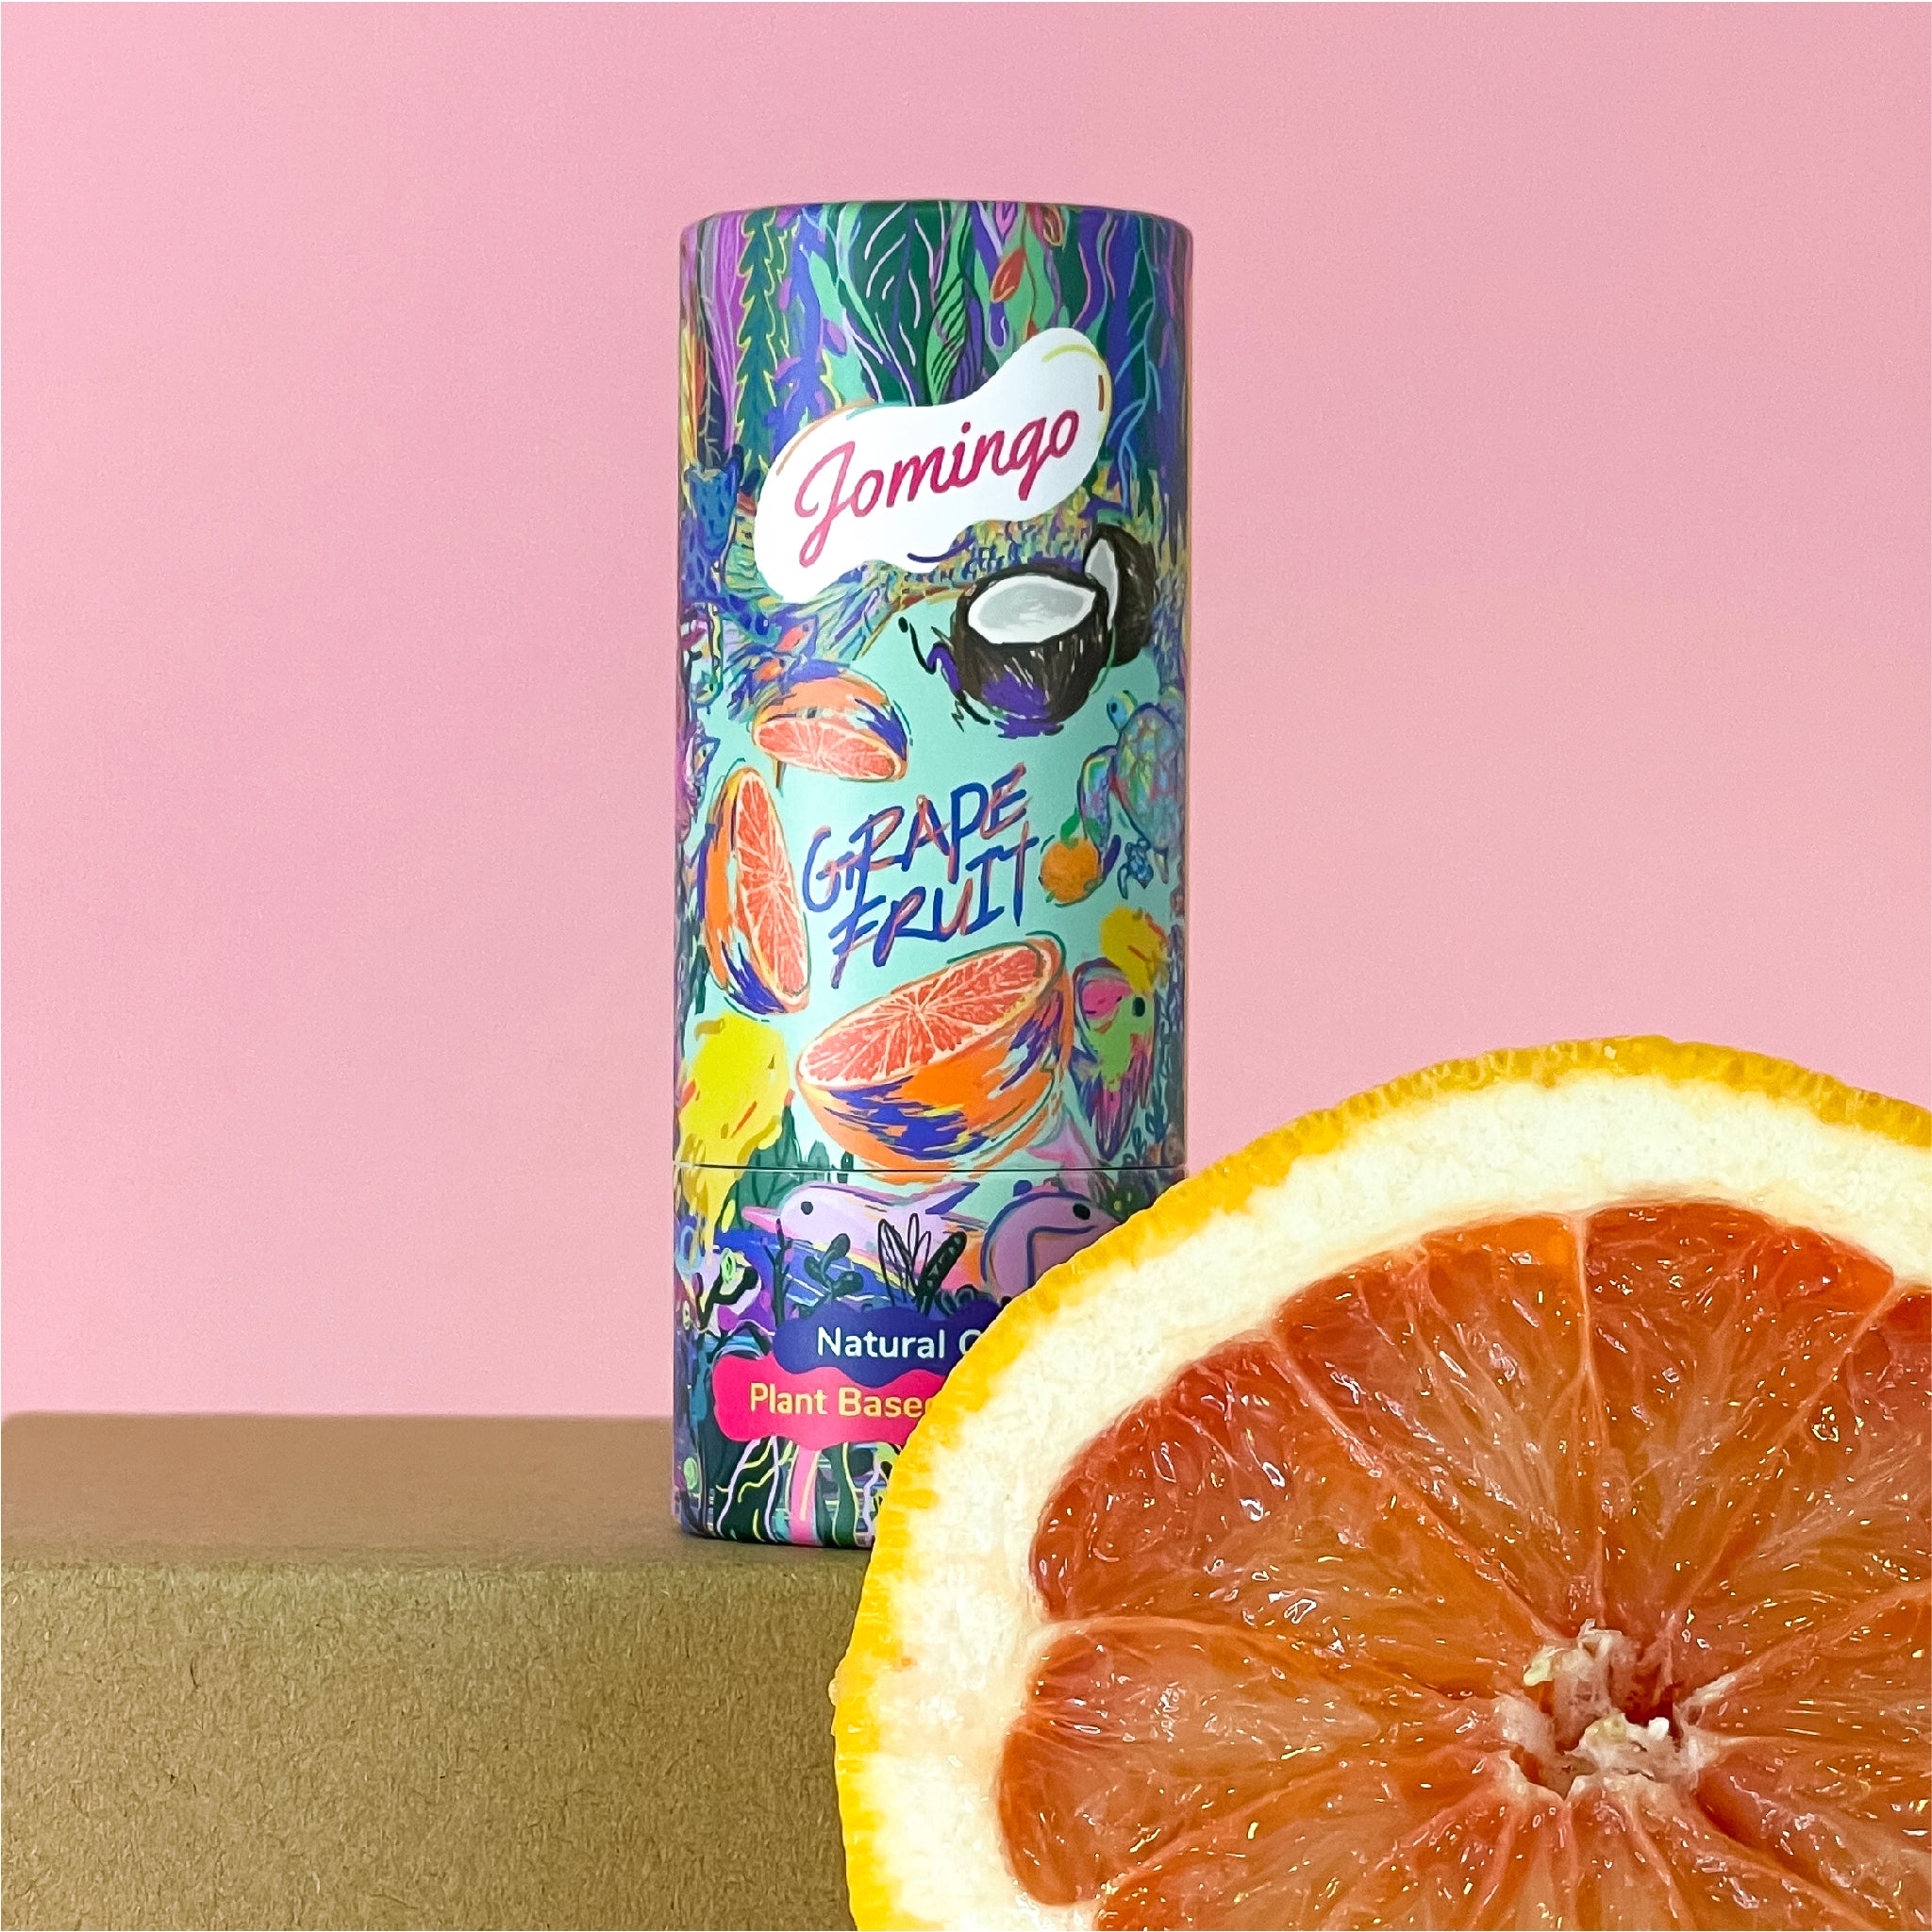 Certified Natural, Aluminium Free & Plant Based Deodorant Stick For Men, Women and Kids - Grapefruit